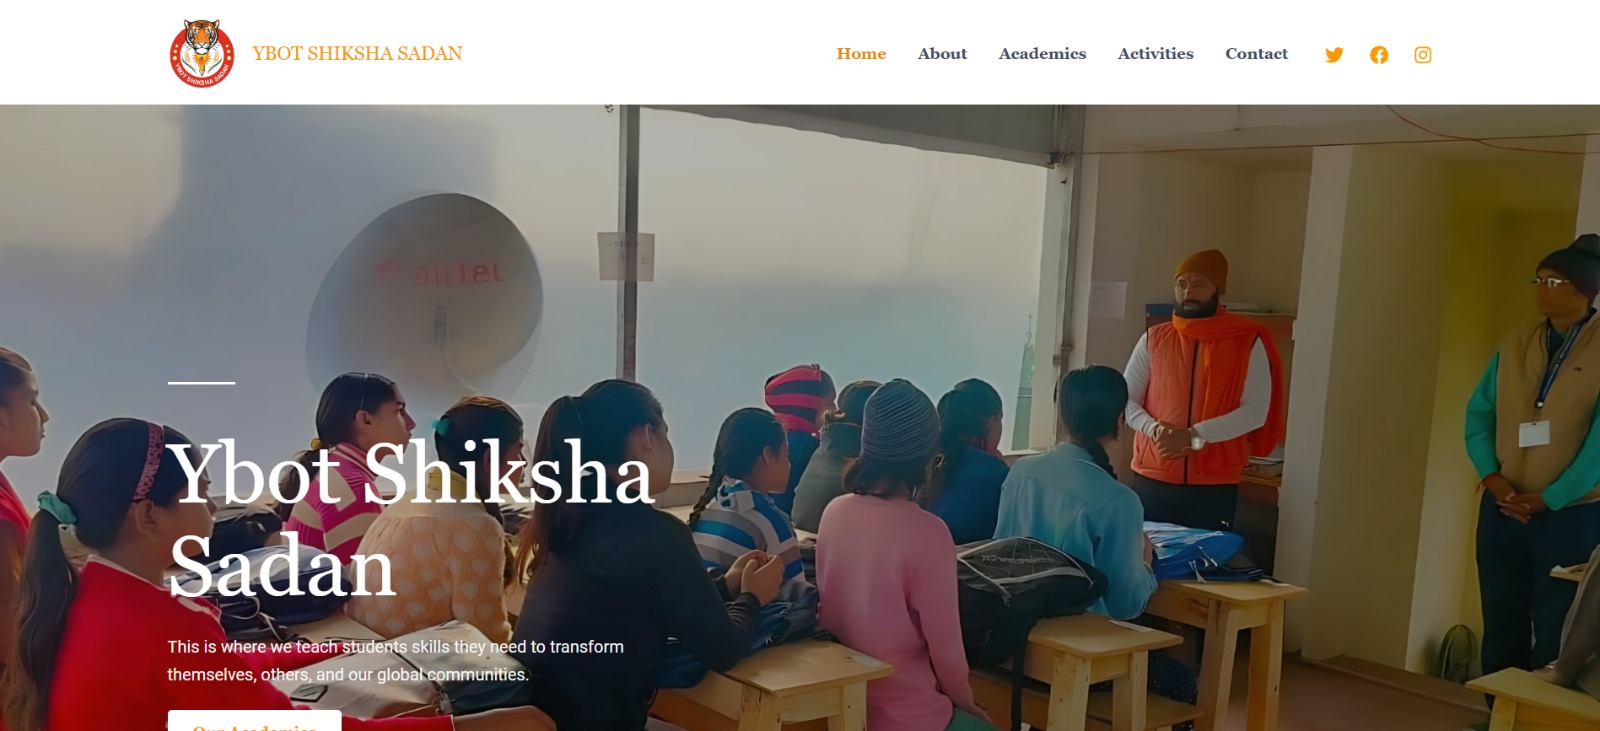 We designed YBOT SHIKSHA SADAN school website